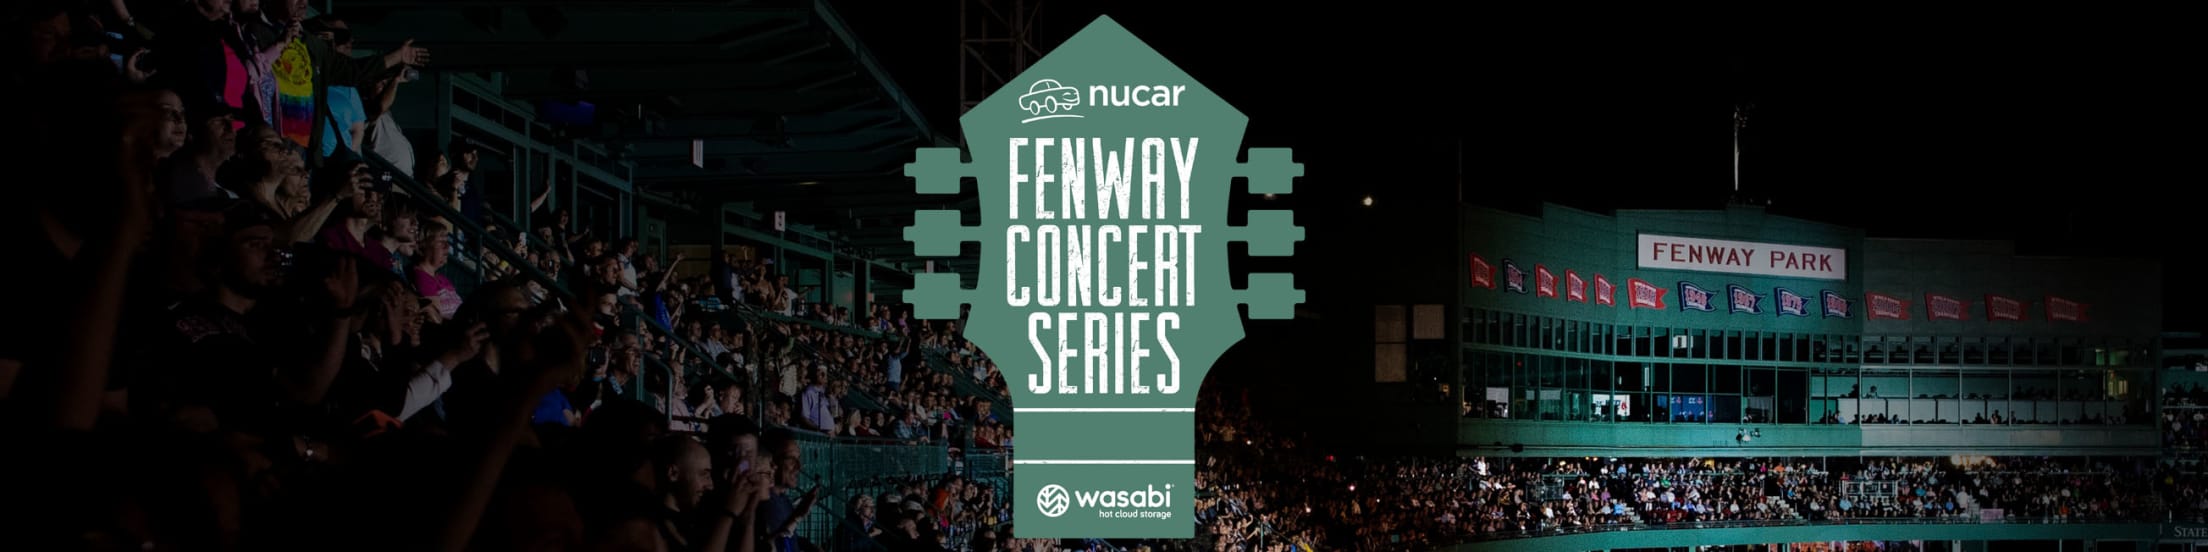 Concert Tickets At Fenway Park Boston